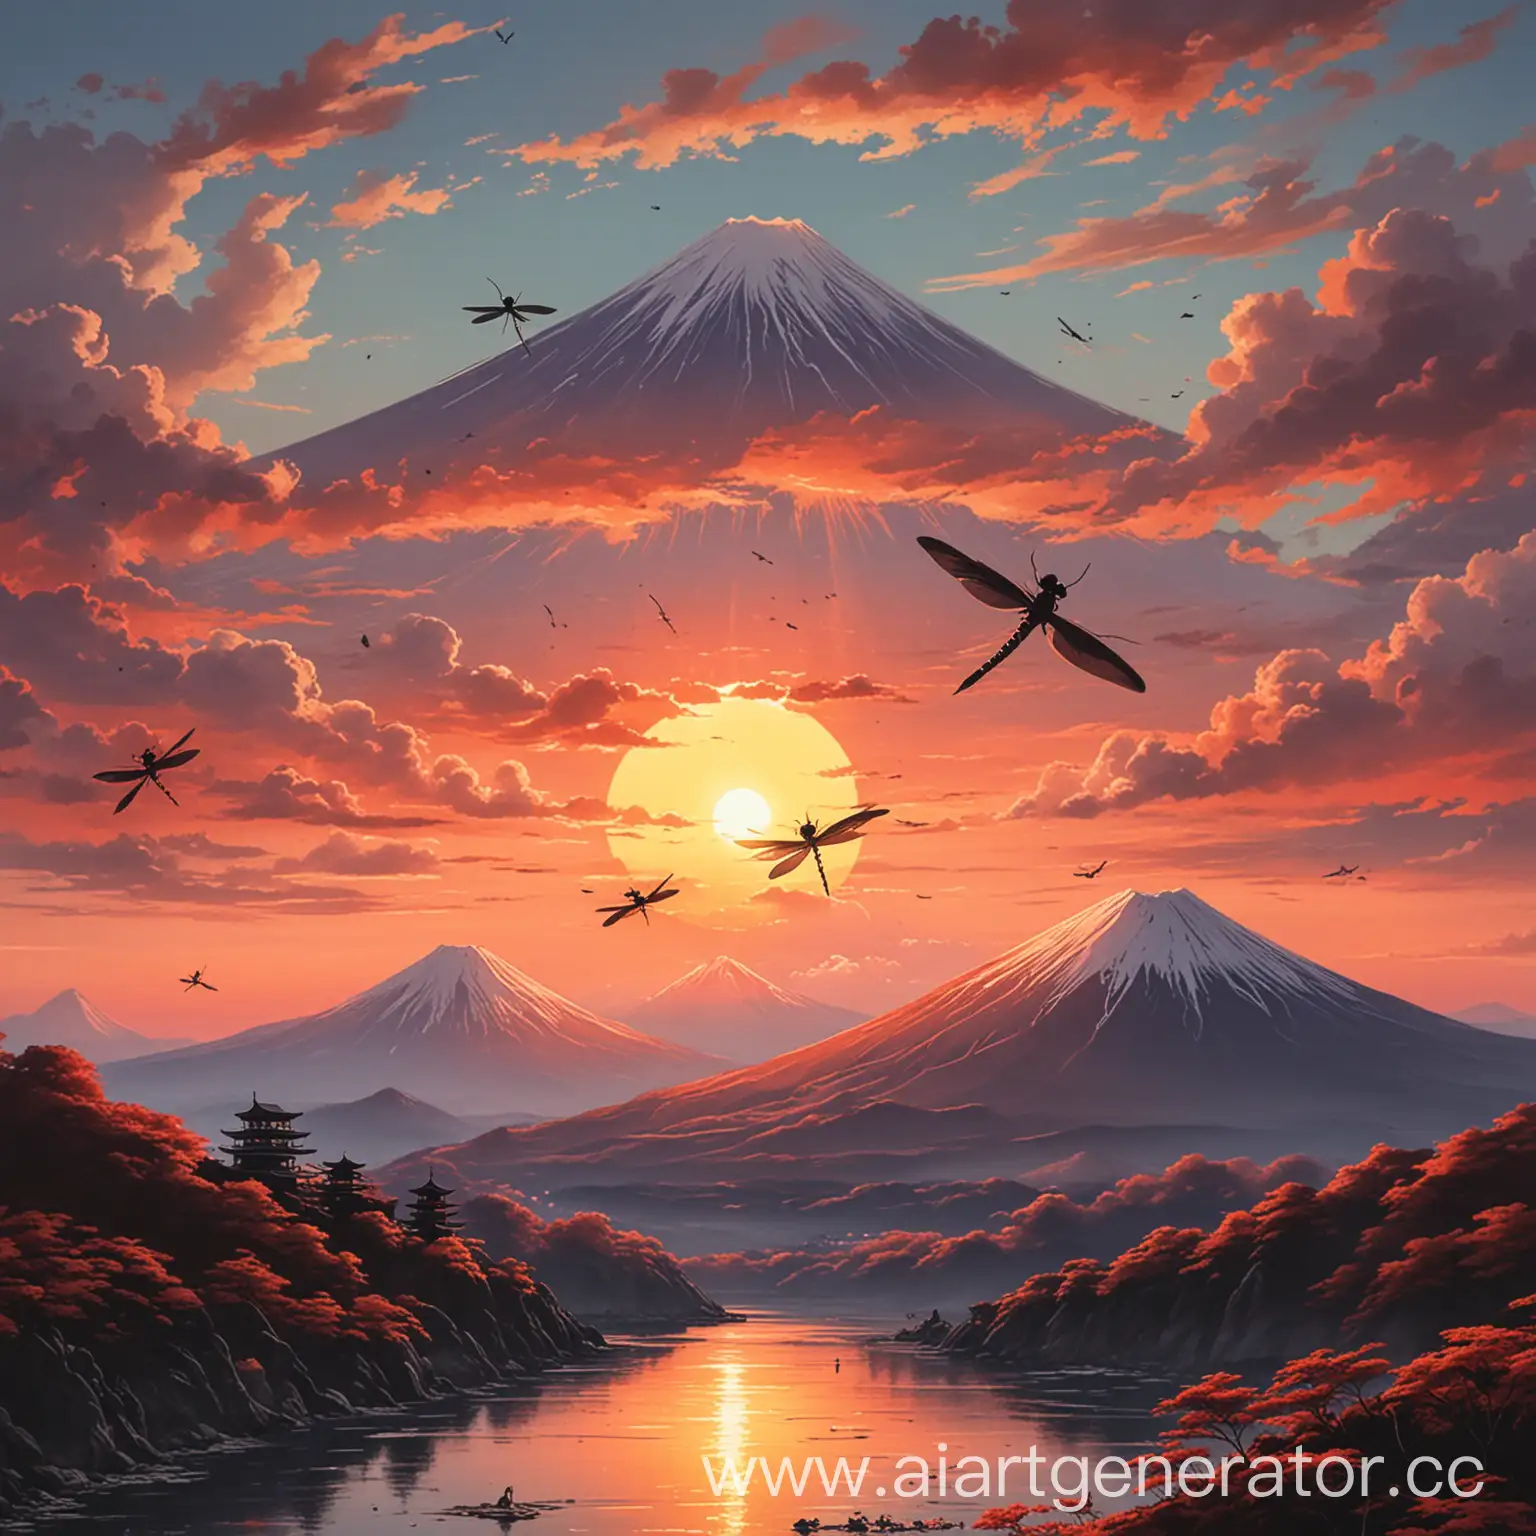 Dragon-Soaring-Over-Mount-Fuji-at-Sunset